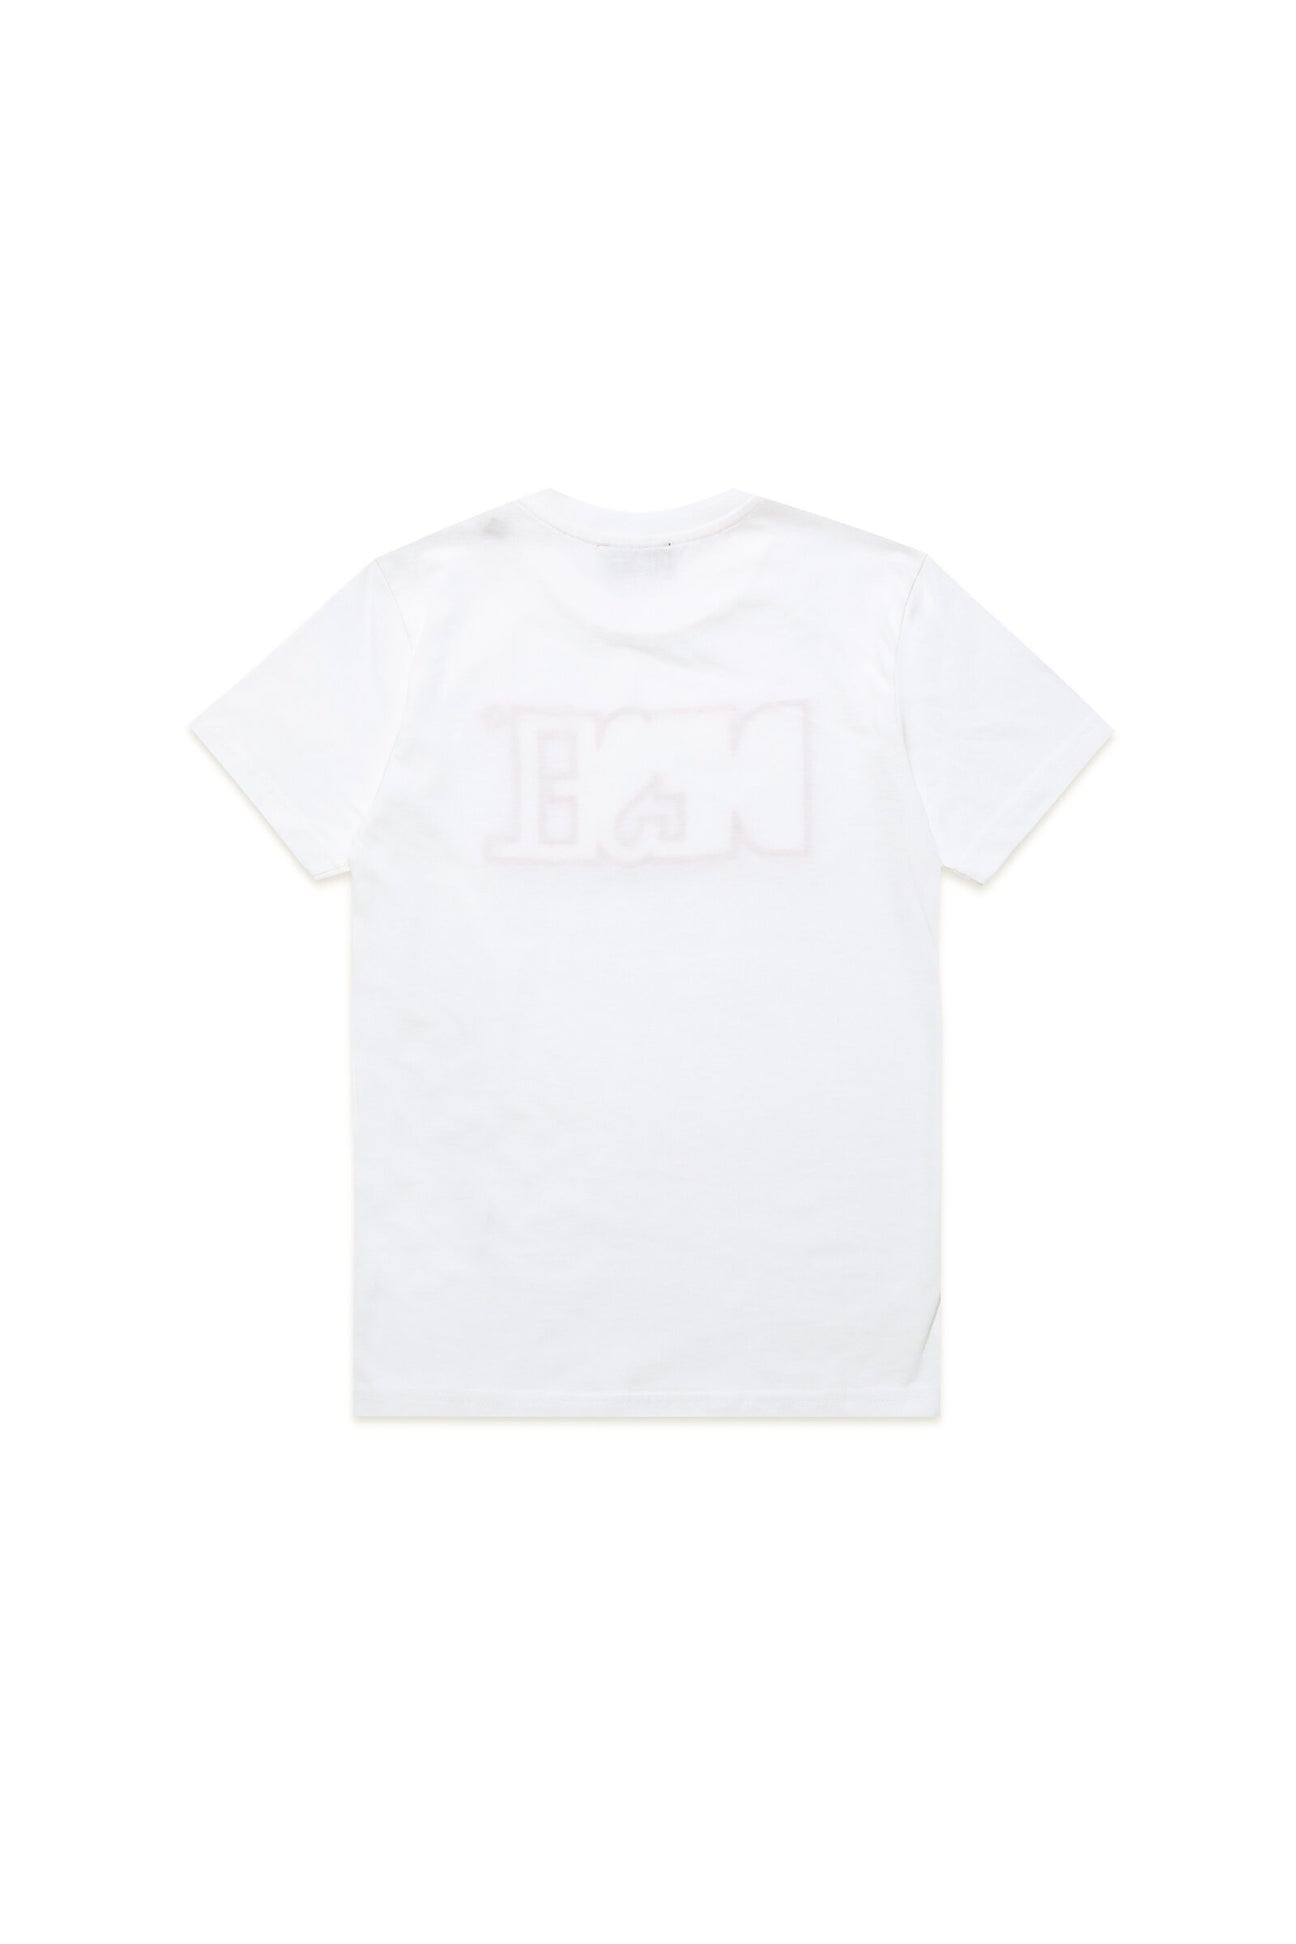 White t-shirt with Diesel logo applique White t-shirt with Diesel logo applique